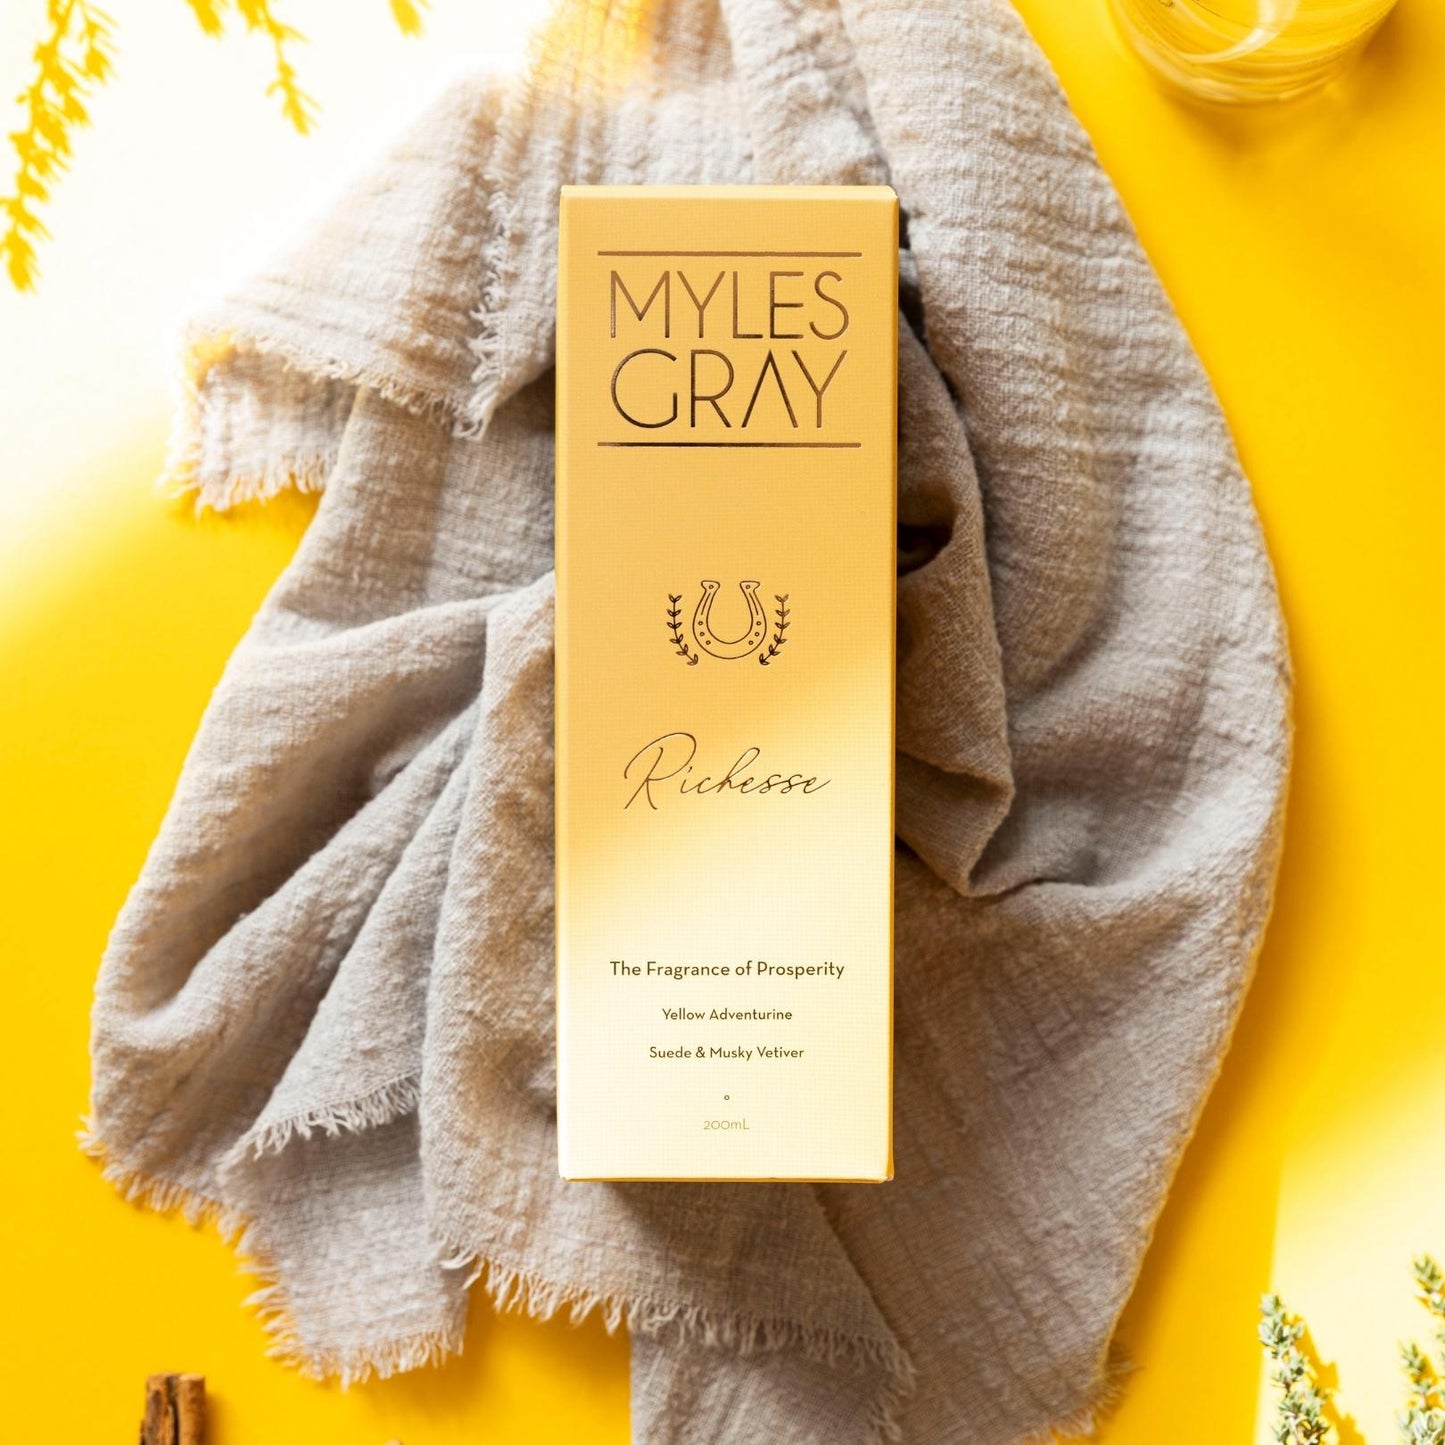 Richesse | The Fragrance Of Prosperity - Myles Gray